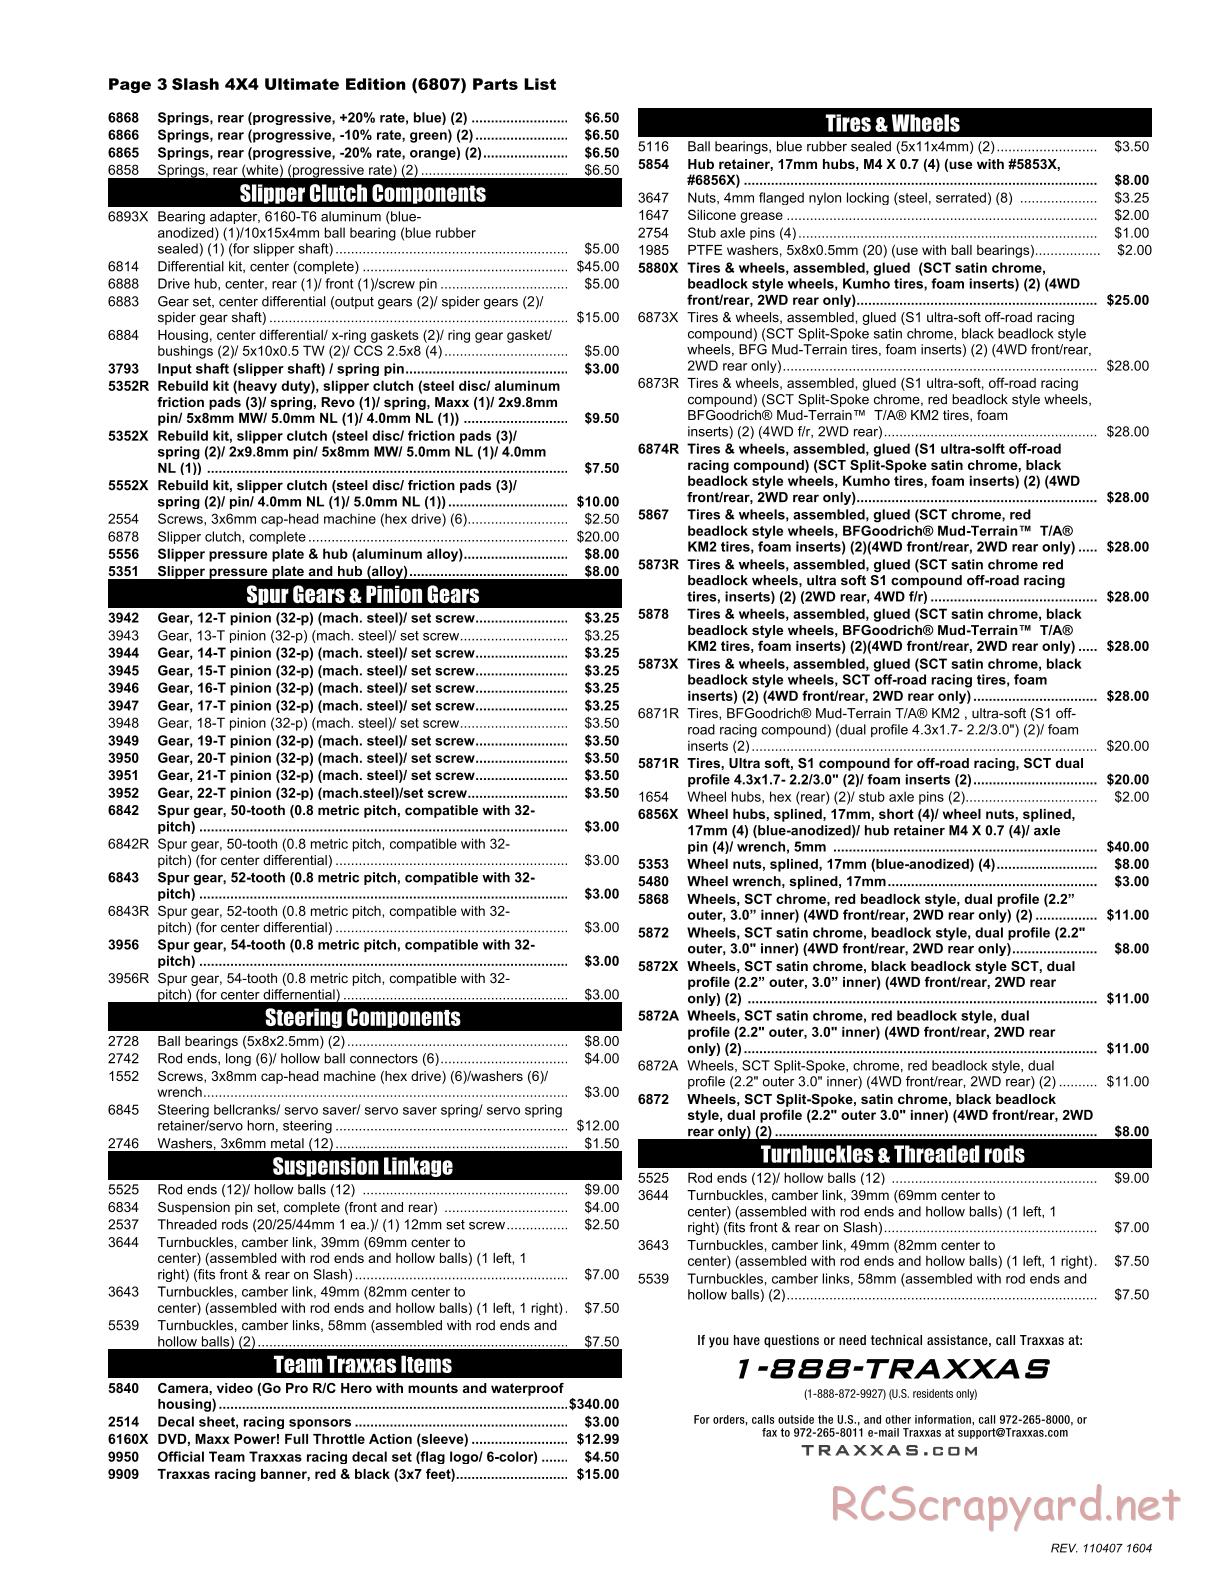 Traxxas - Slash 4x4 Ultimate - Parts List - Page 3